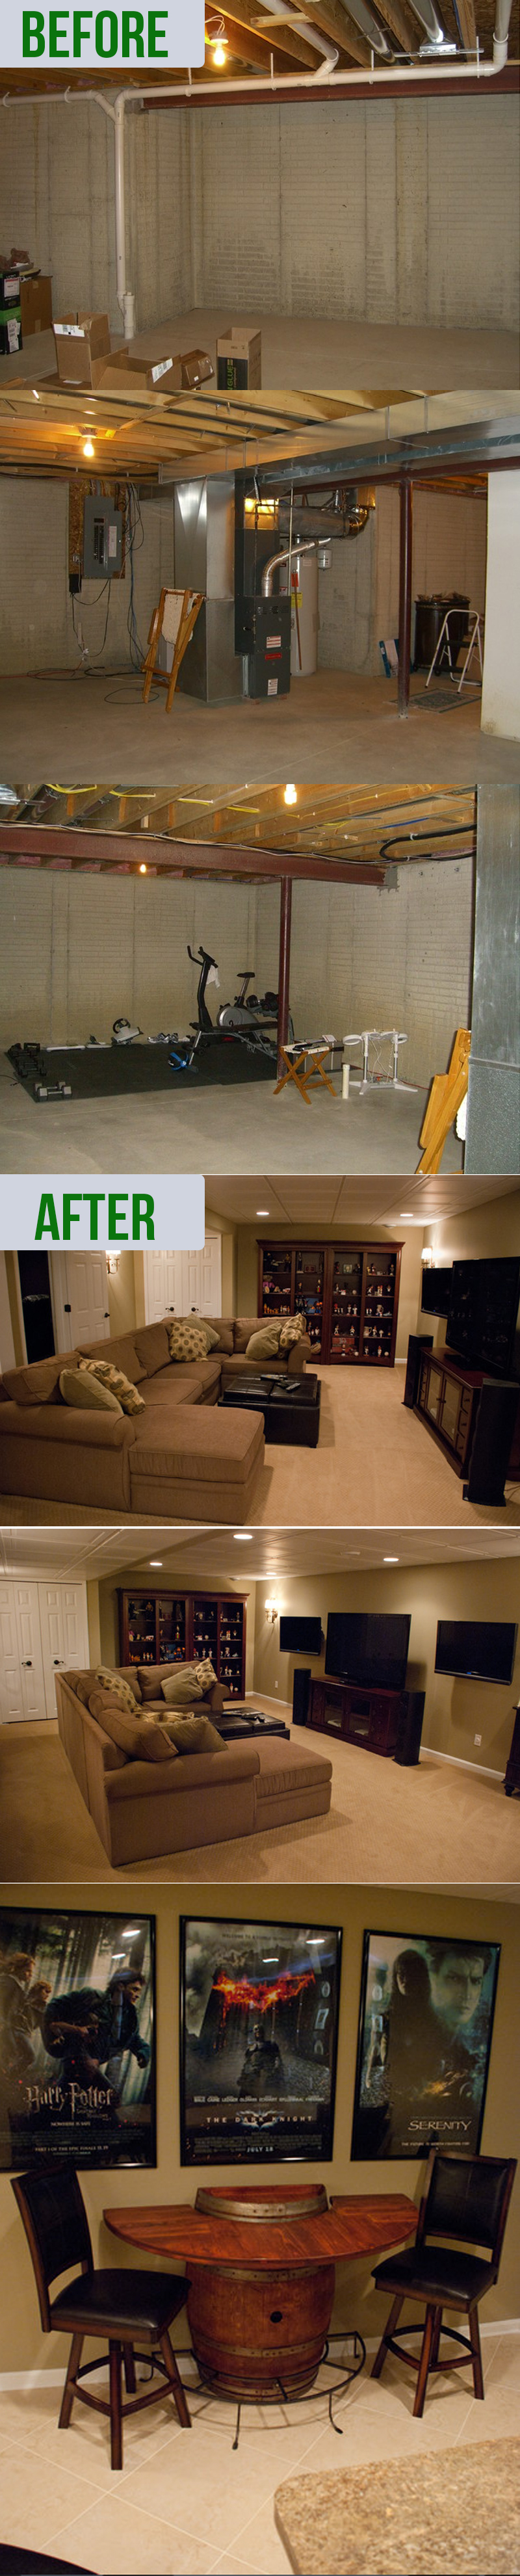 renovating an old basement